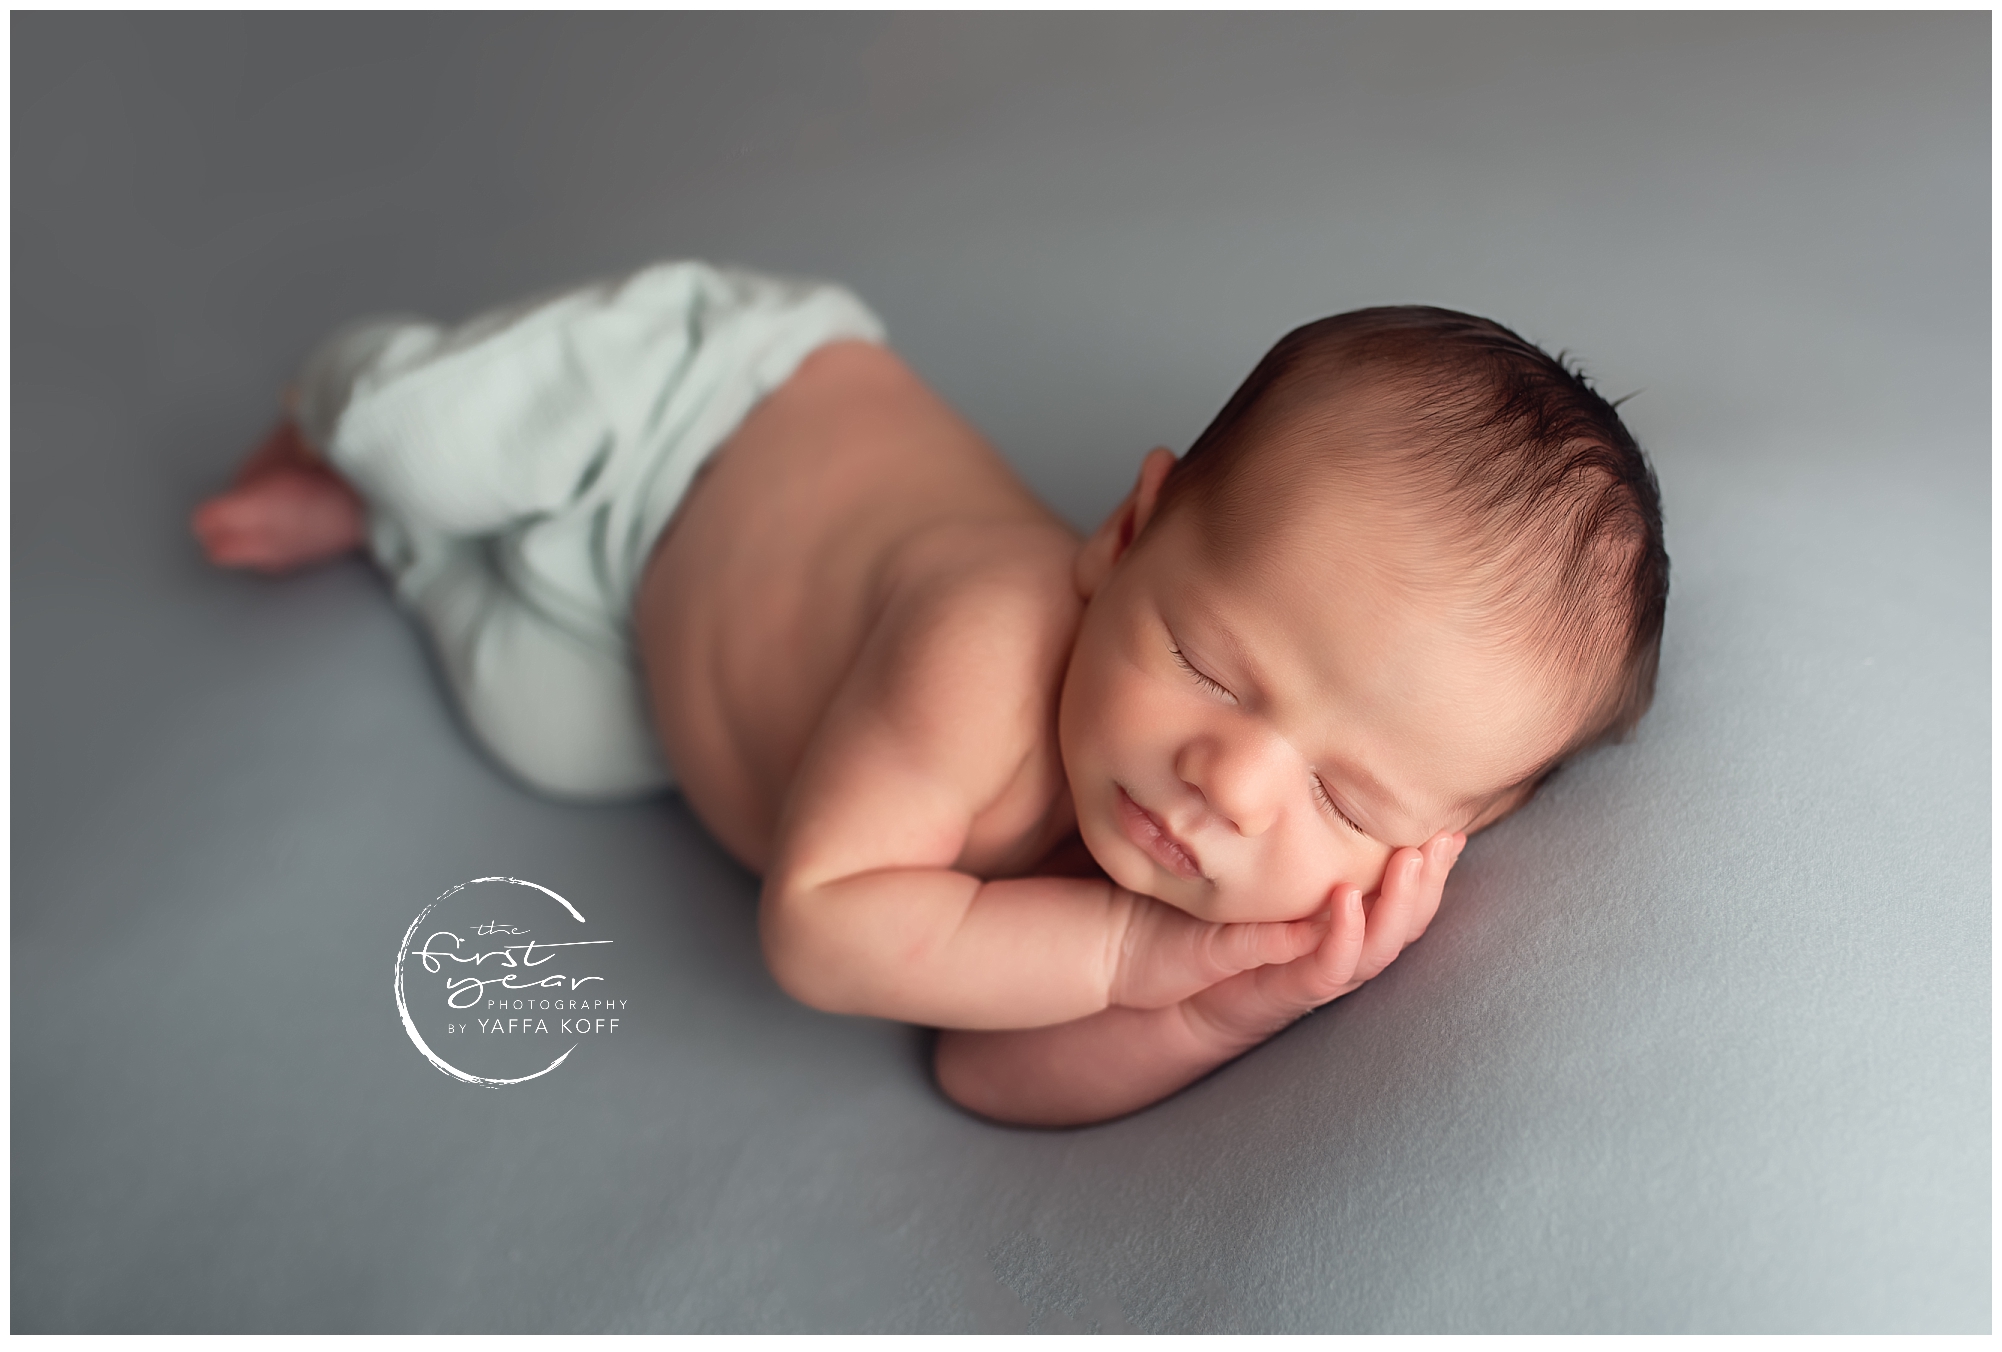 Newborn Photography tips